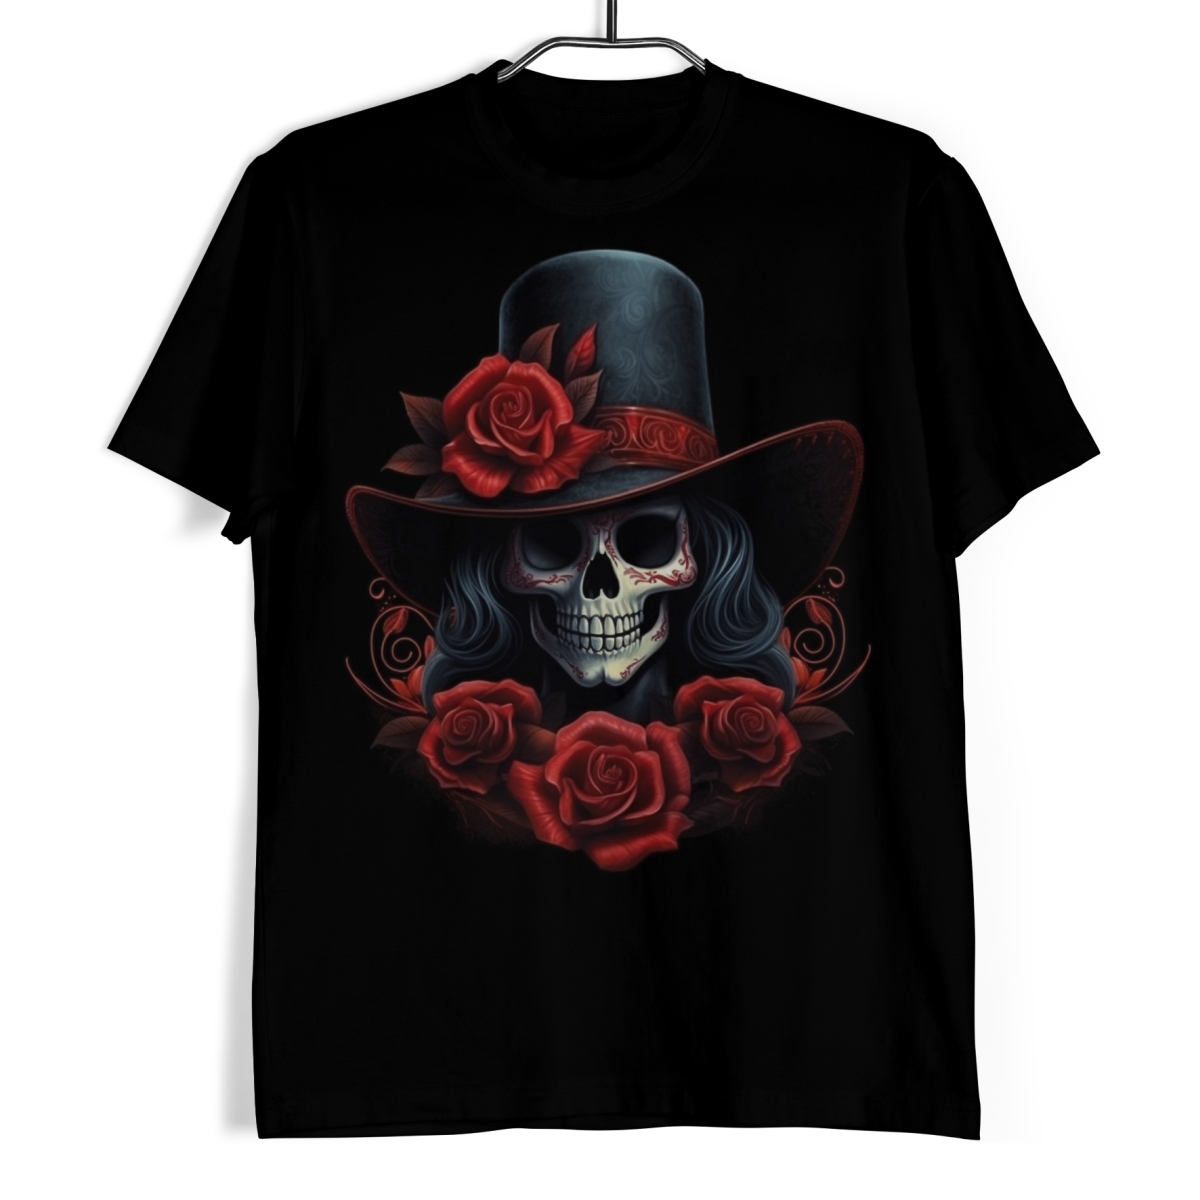 Tričko s lebkou - Dáma s růžemi XXL